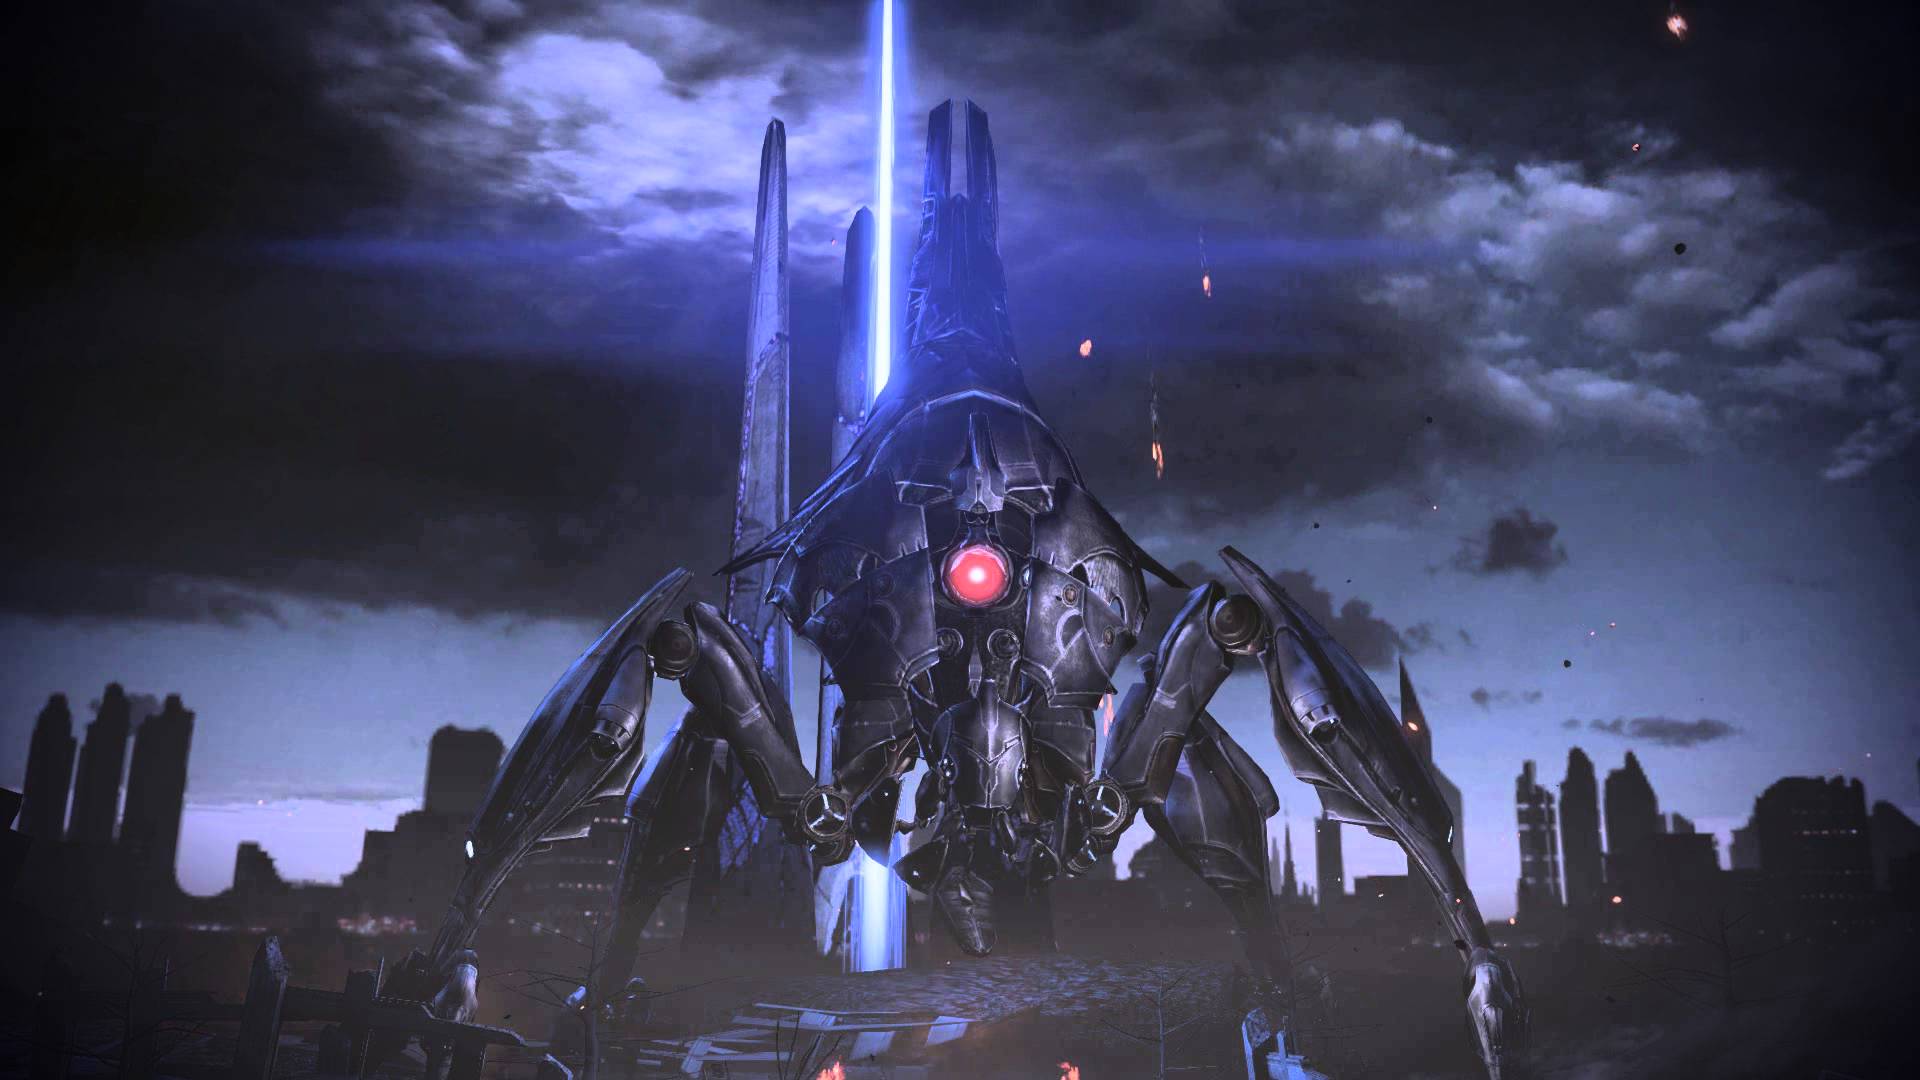 Mass Effect 3 Reaper Destroyer Dreamscene Video Wallpaper - YouTube